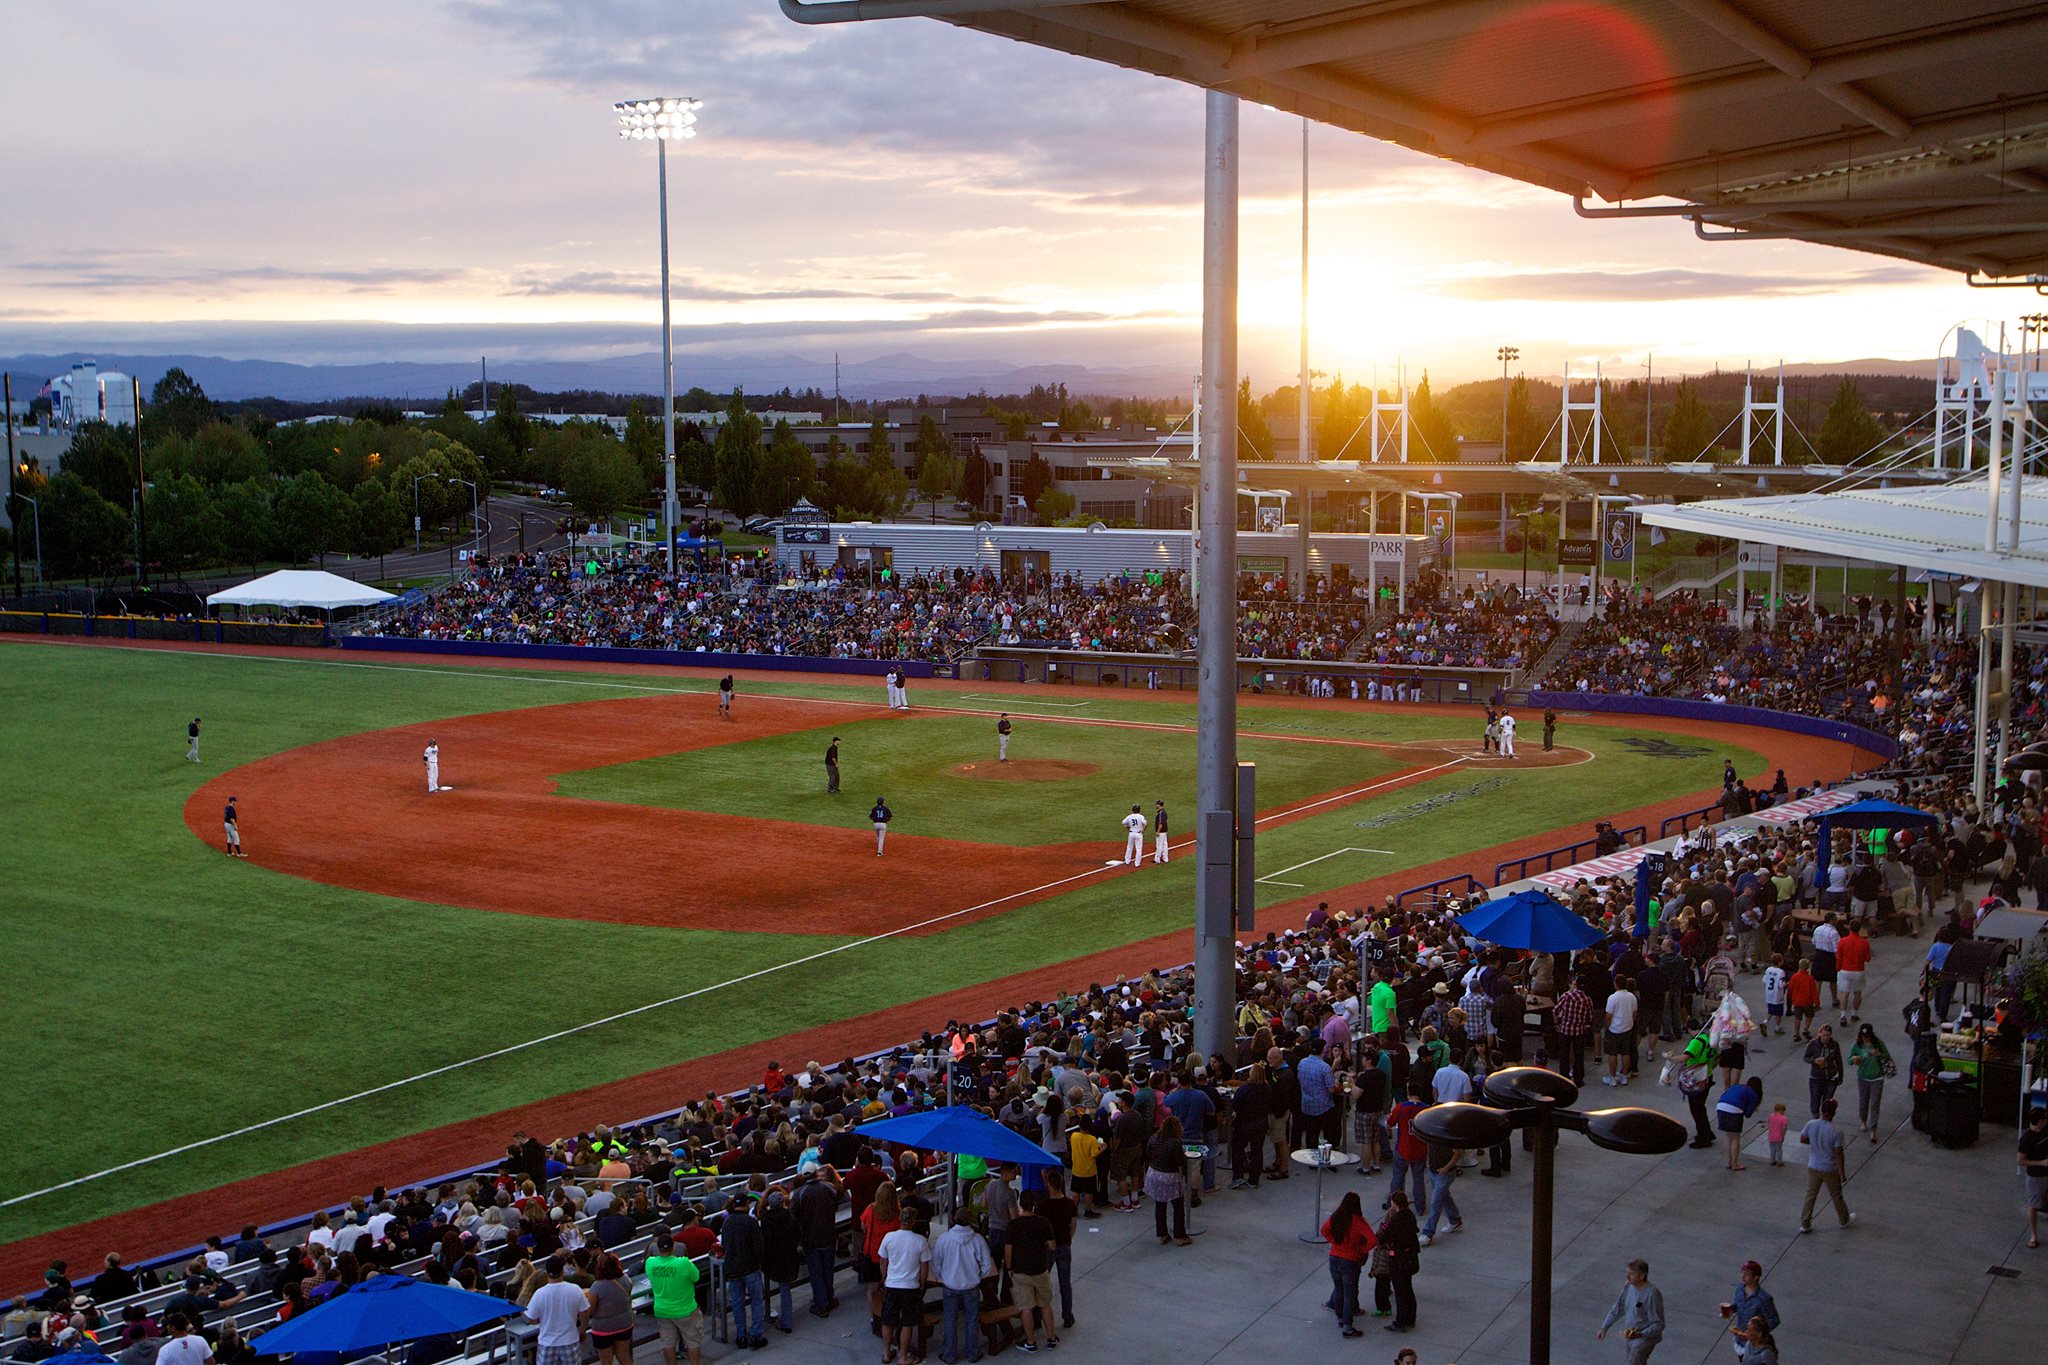 Hops pitch $40-$100M Ron Tonkin Field upgrades Ballpark Digest